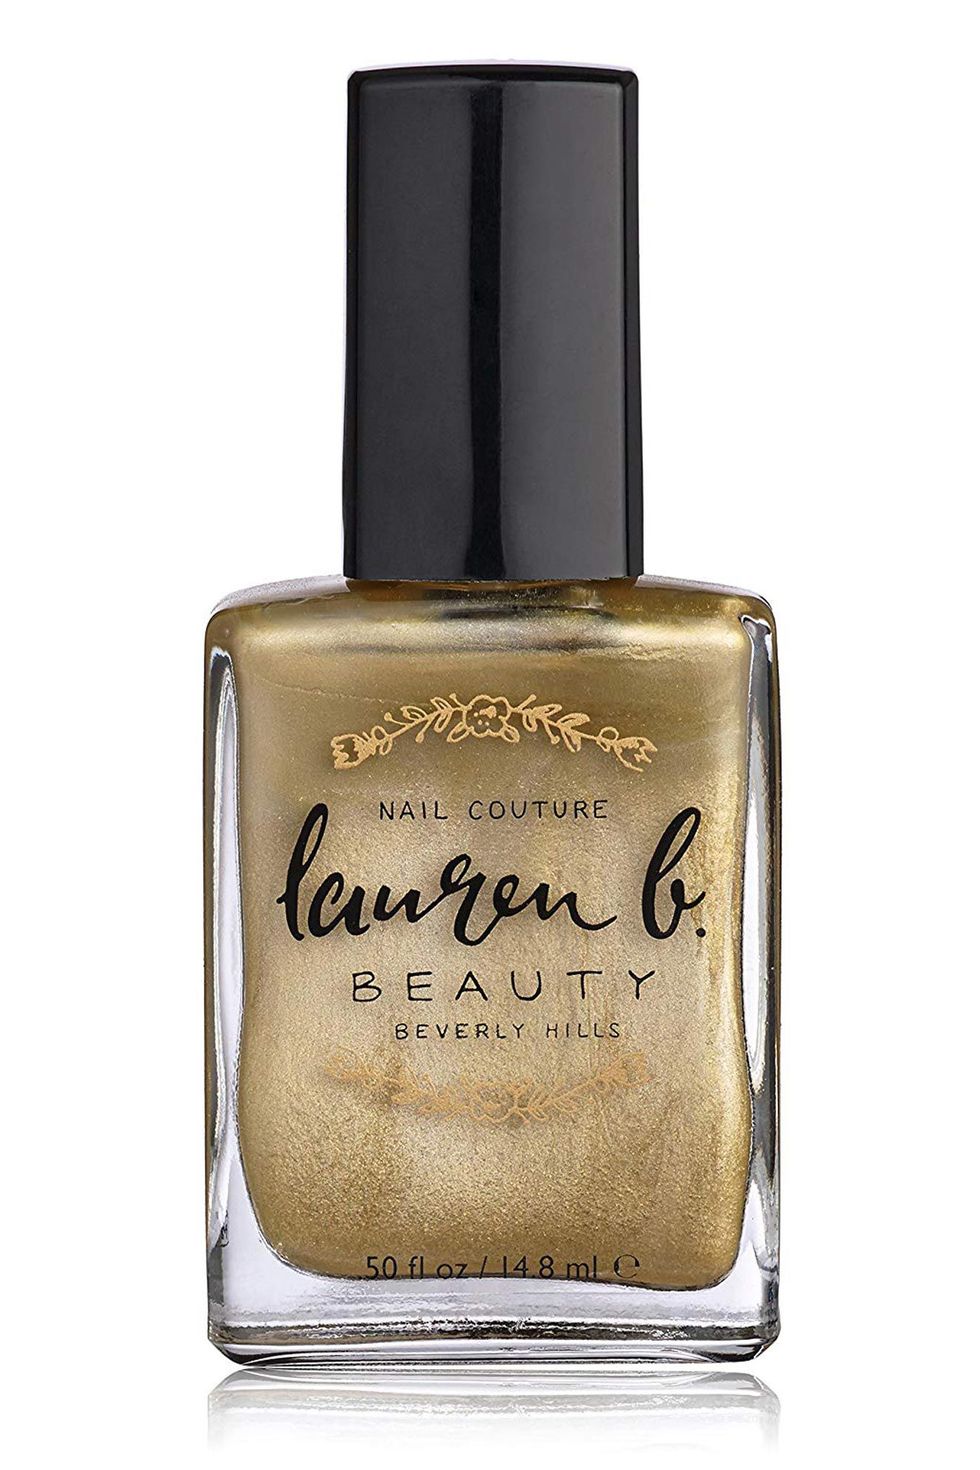 Lauren B. Beauty Nail Lacquer Nail Polish in "Where's My Oscar?"